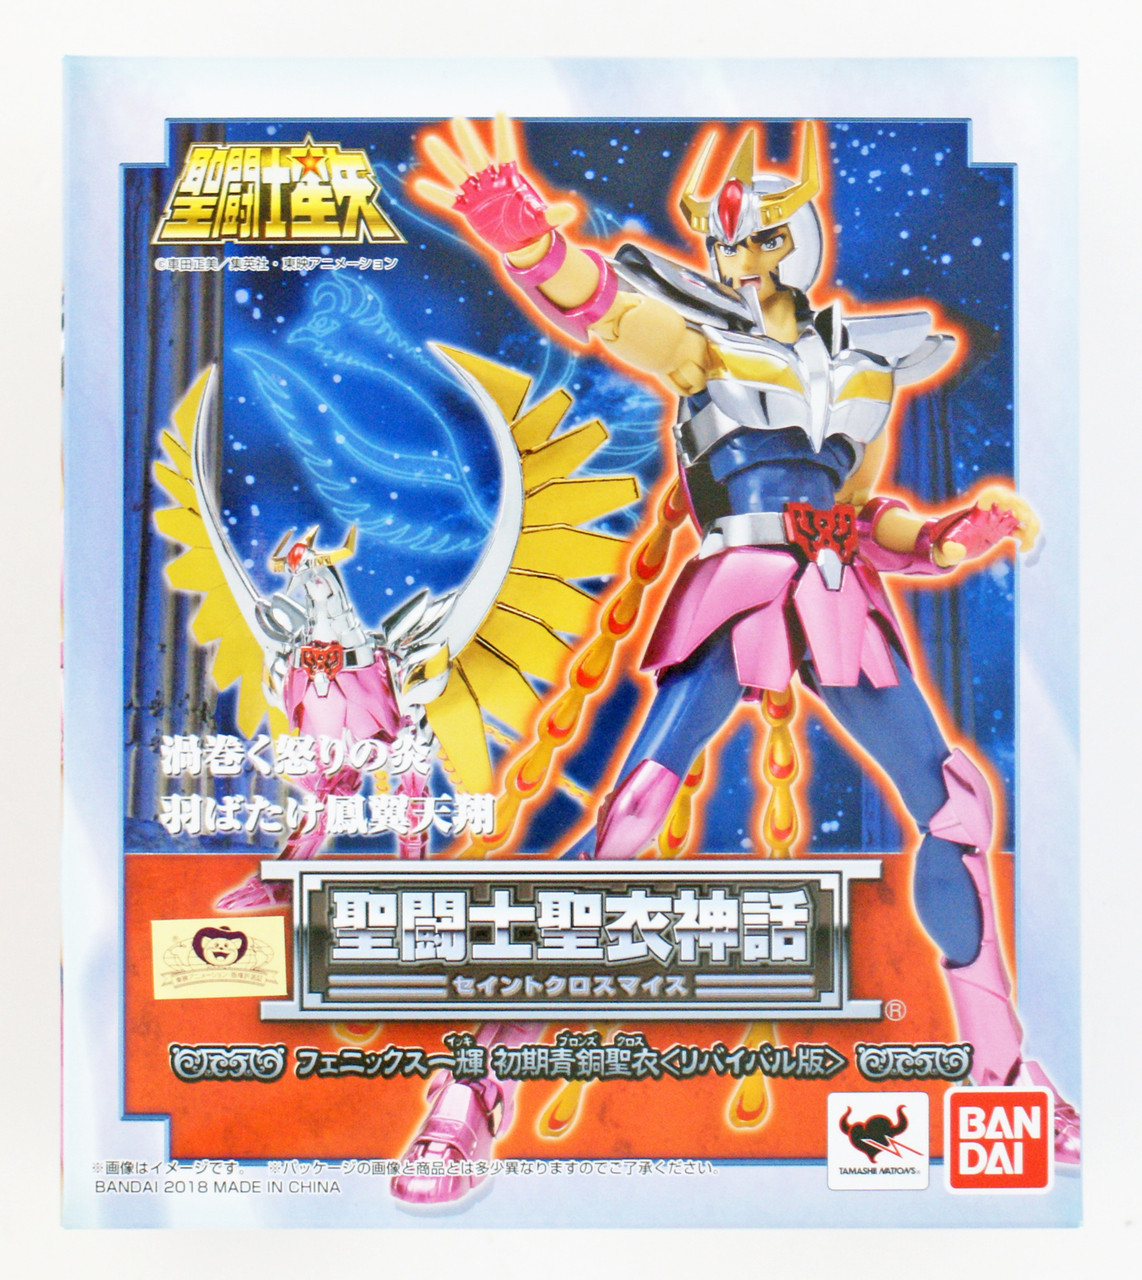  Saint Seiya - Phoenix Ikki God Myth Cloth Action Figure by  Bandai : Toys & Games